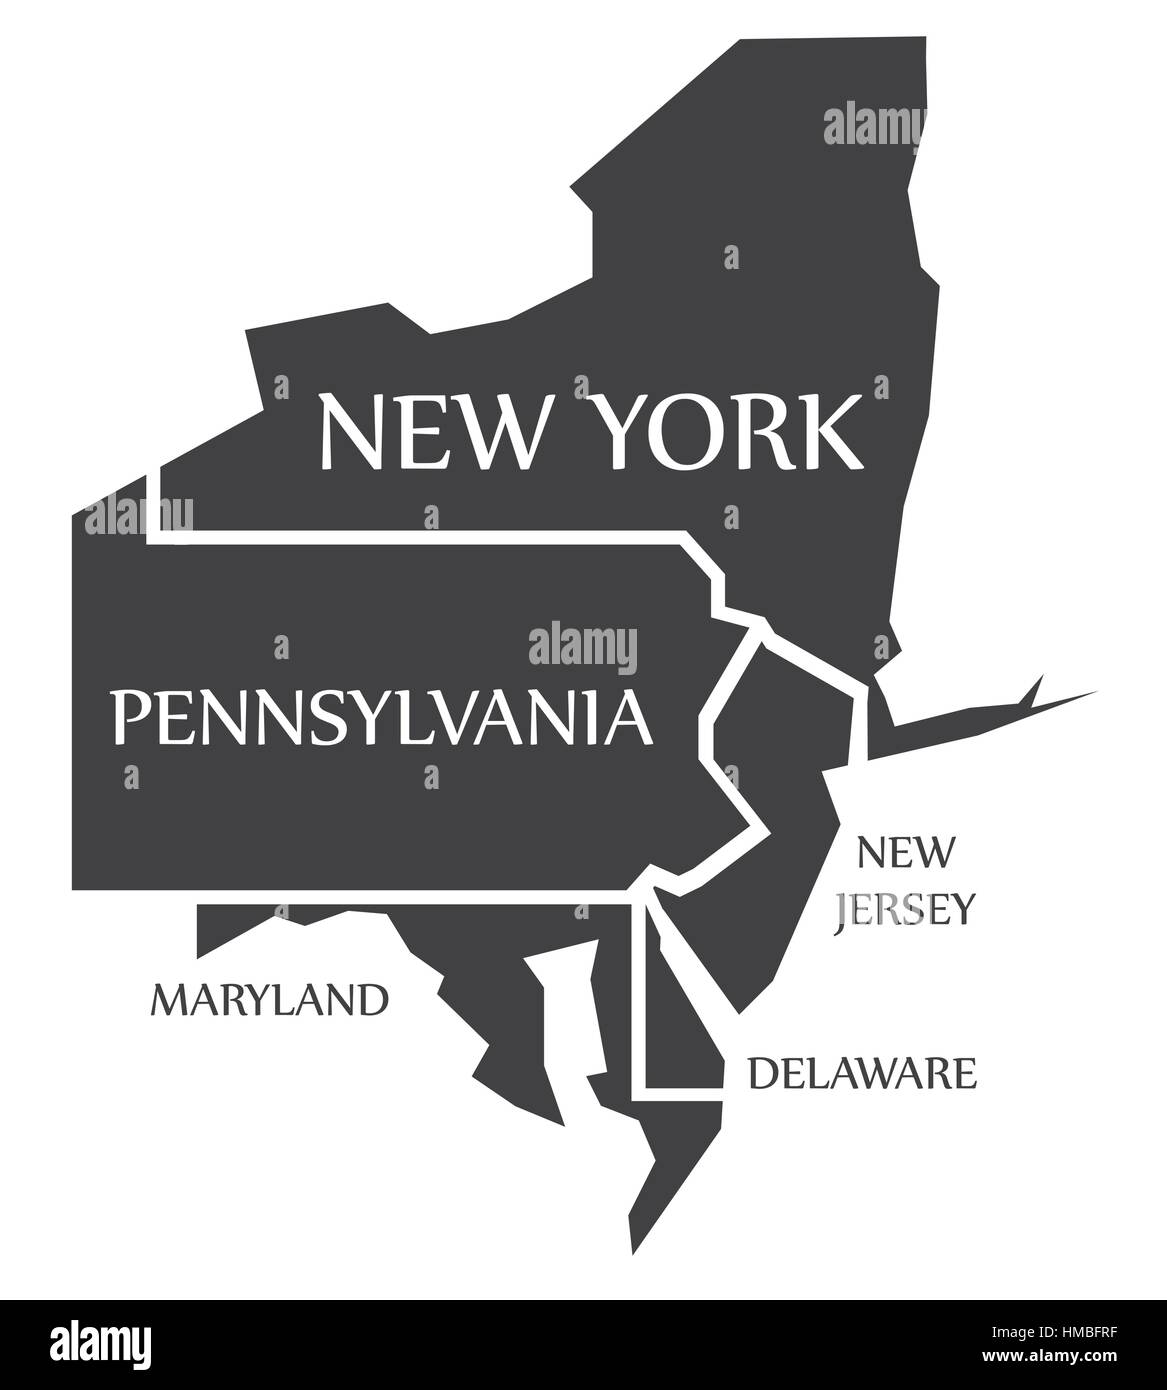 New York Pennsylvania New Jersey Delaware Maryland Map